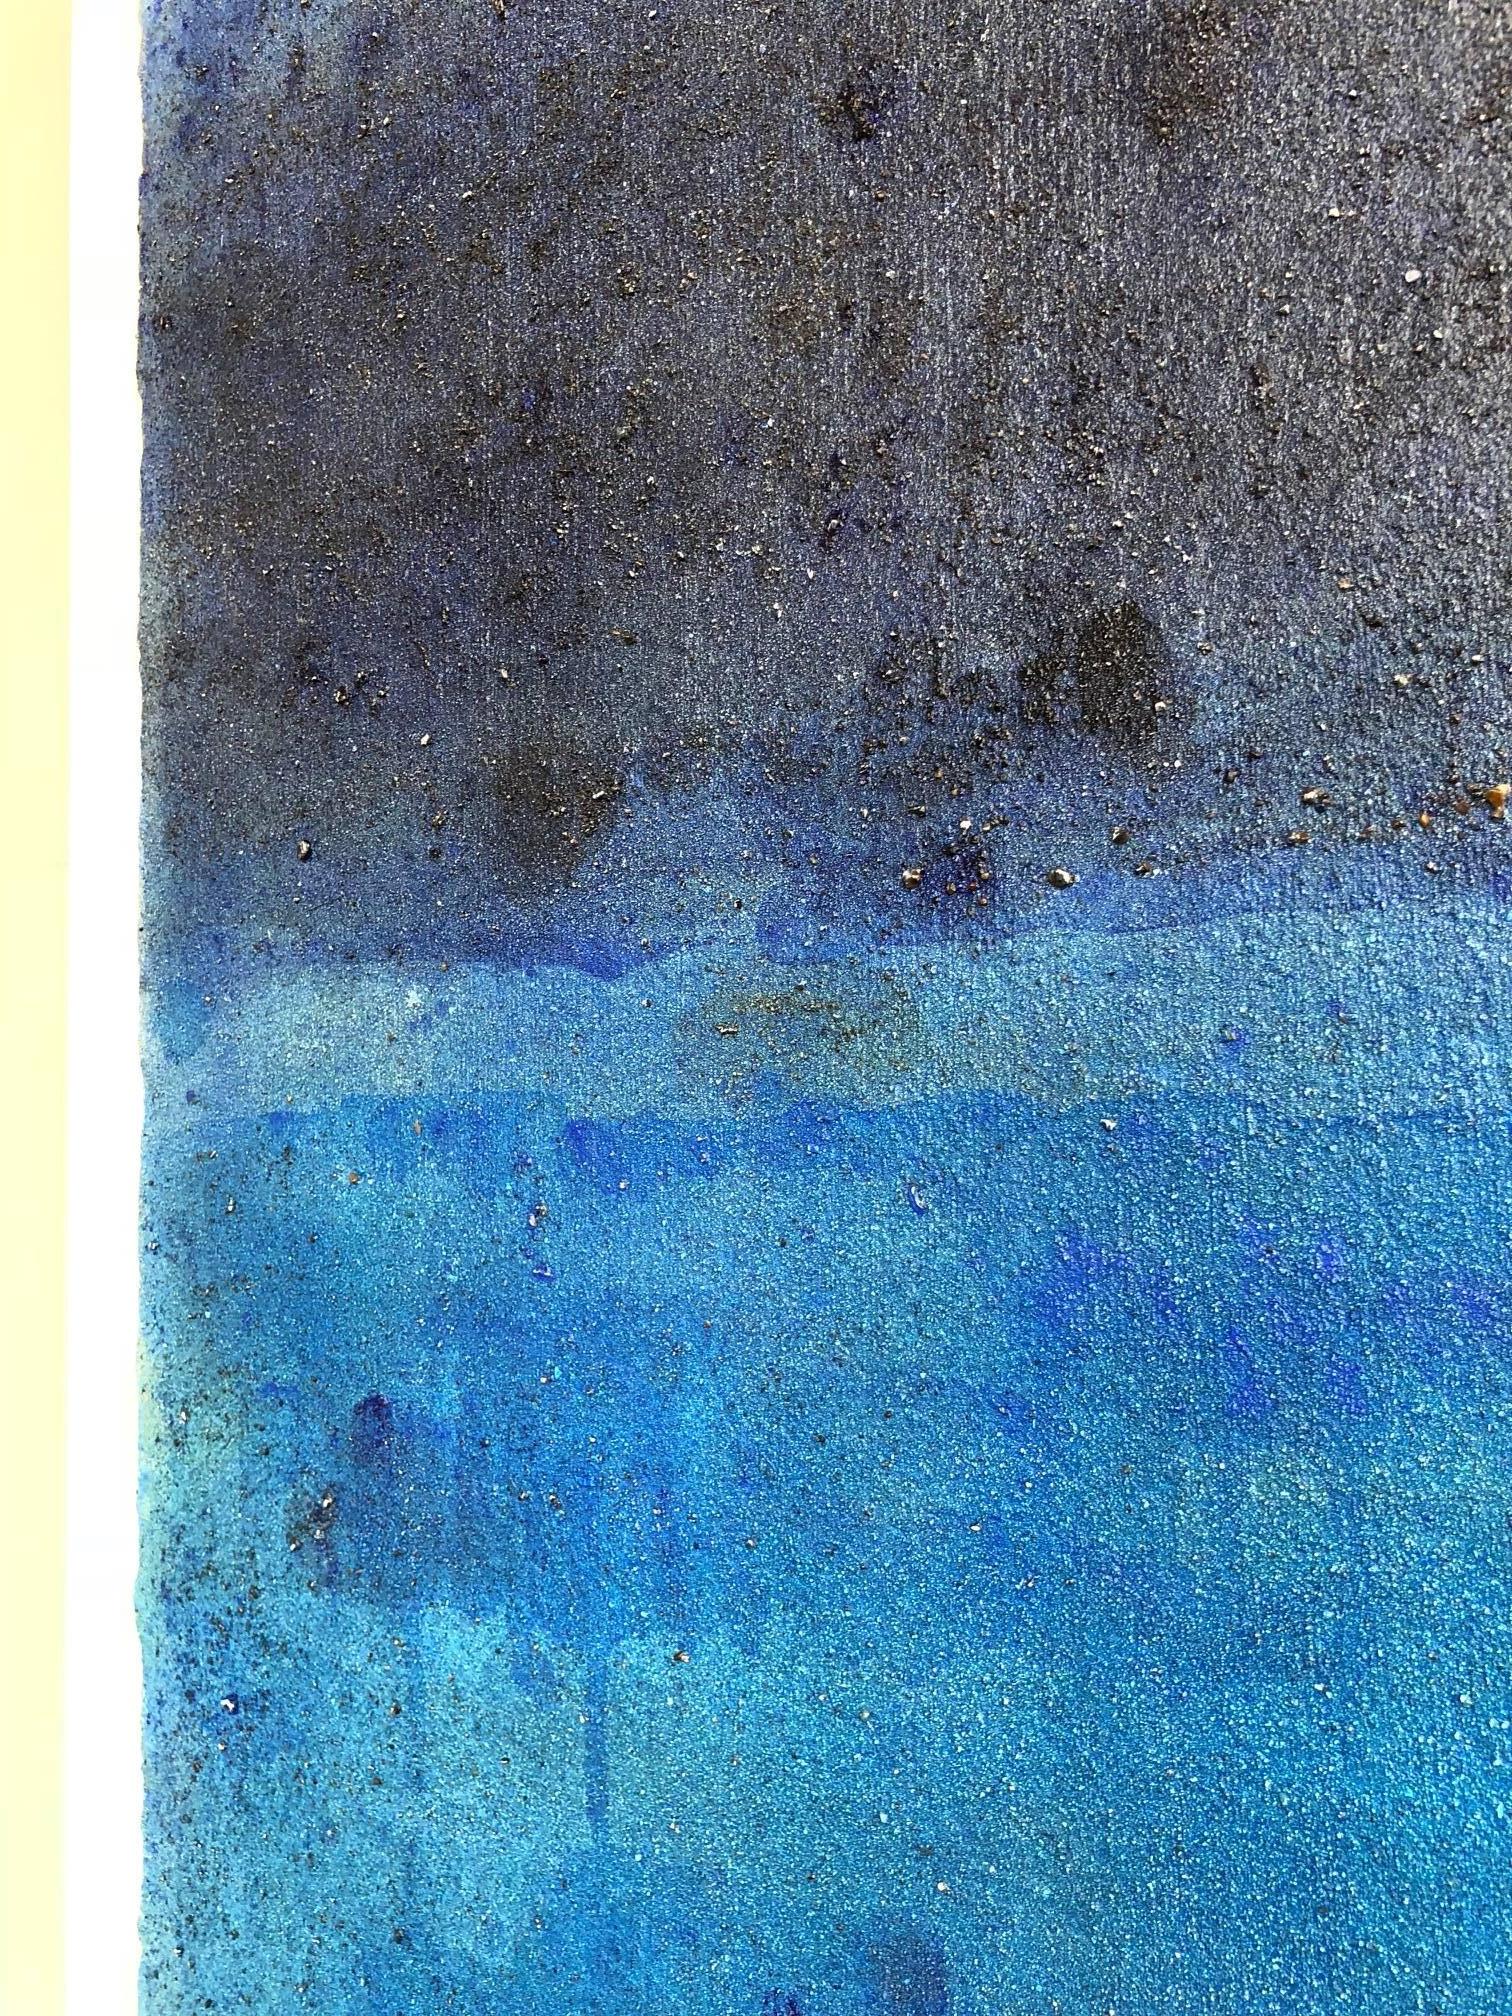 Nourish Her Blue / acrylic on canvas 1